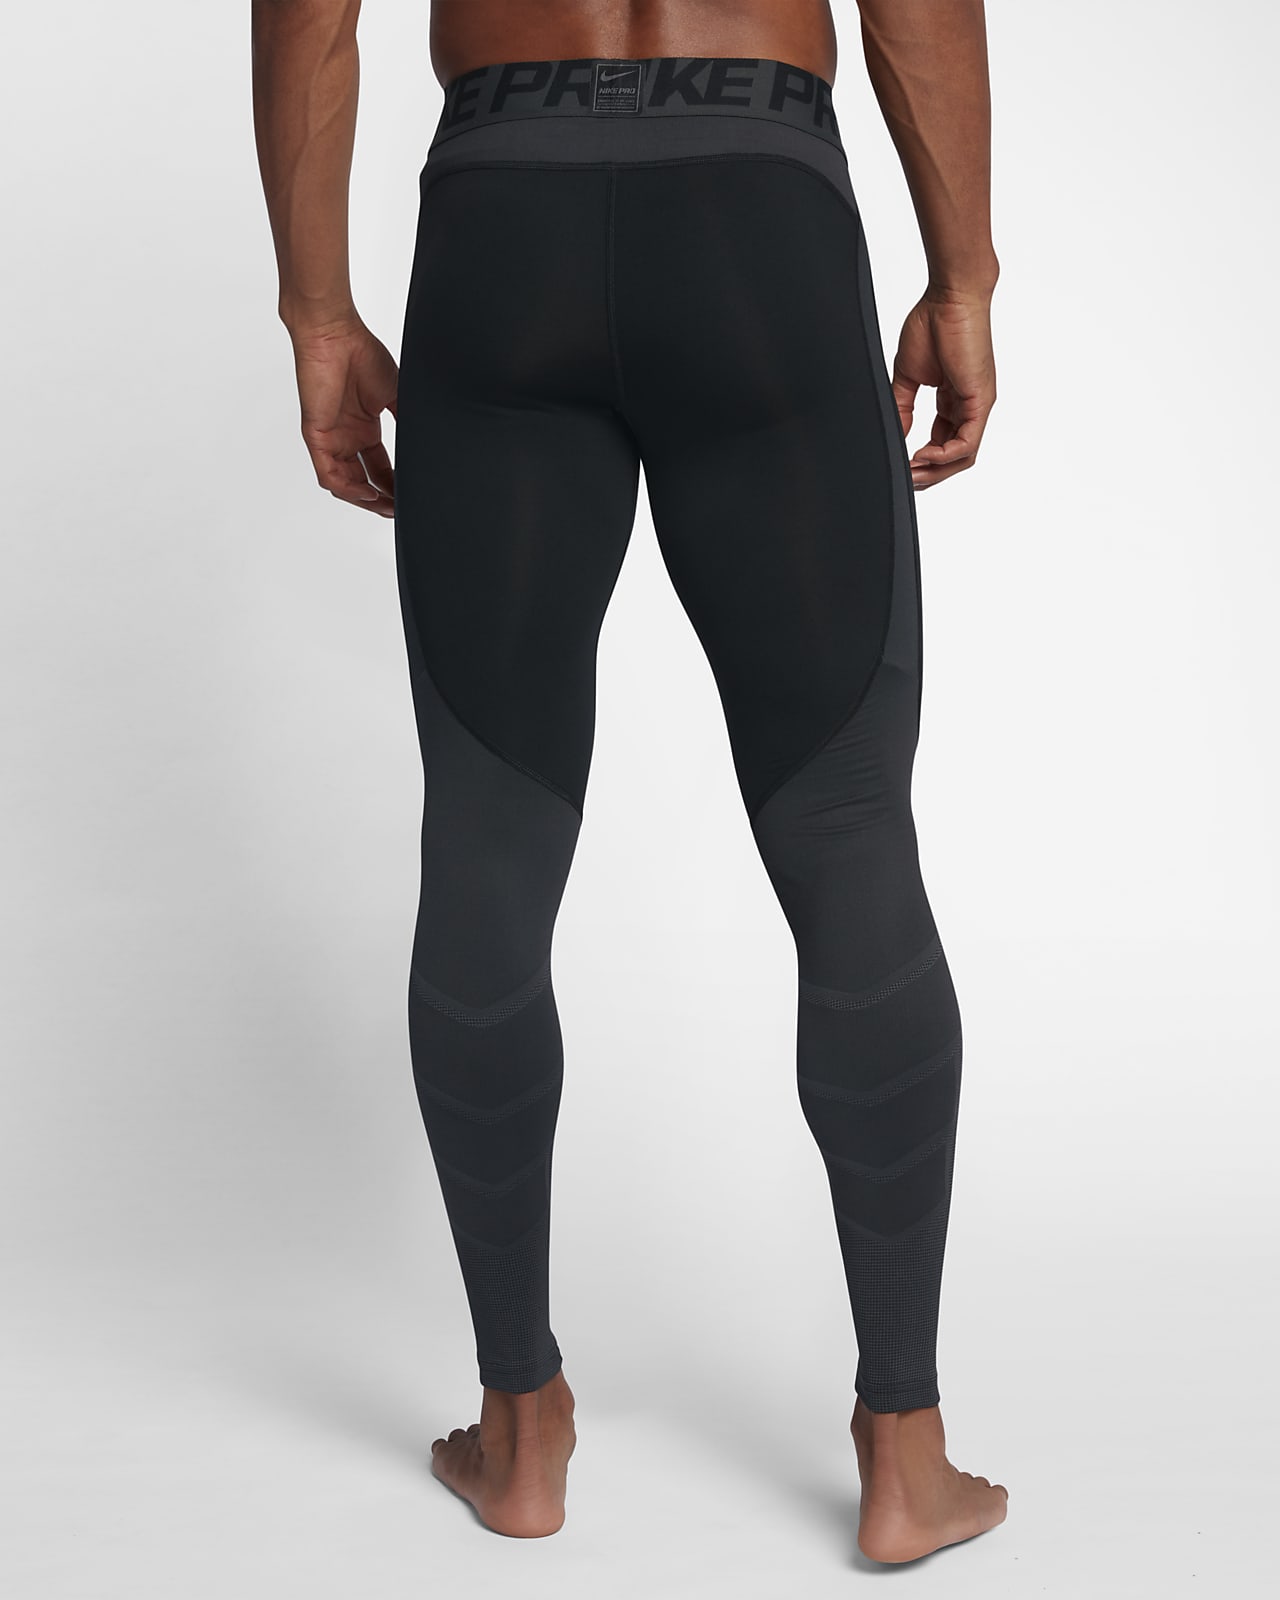 Buy > nike pro hyperwarm men's training tights > in stock